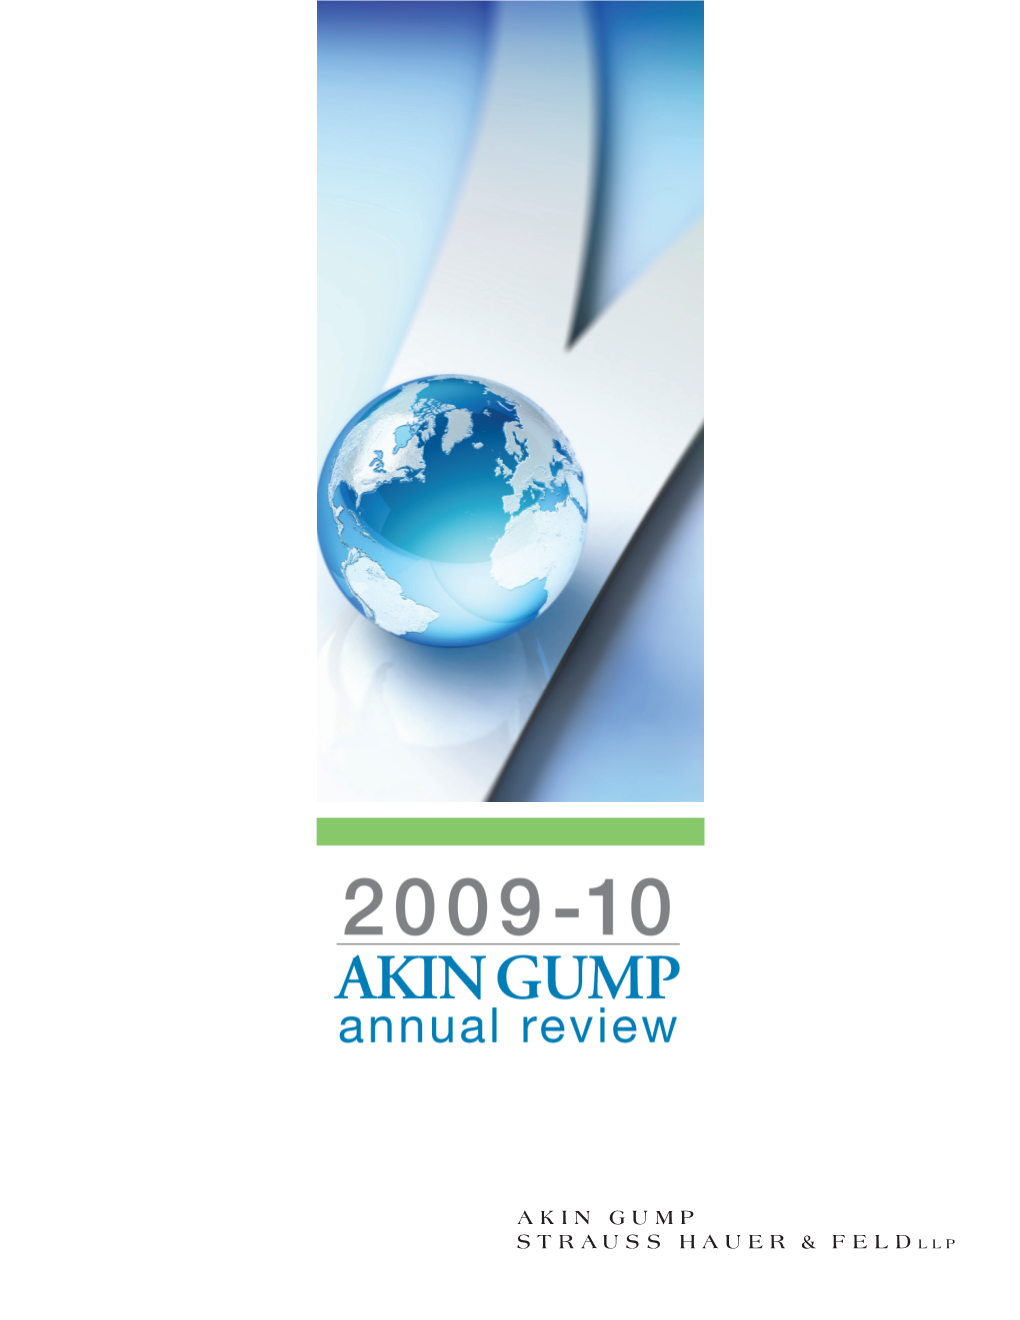 Akin Gump Helped the Company Raise Capital Late in 2008, Despite